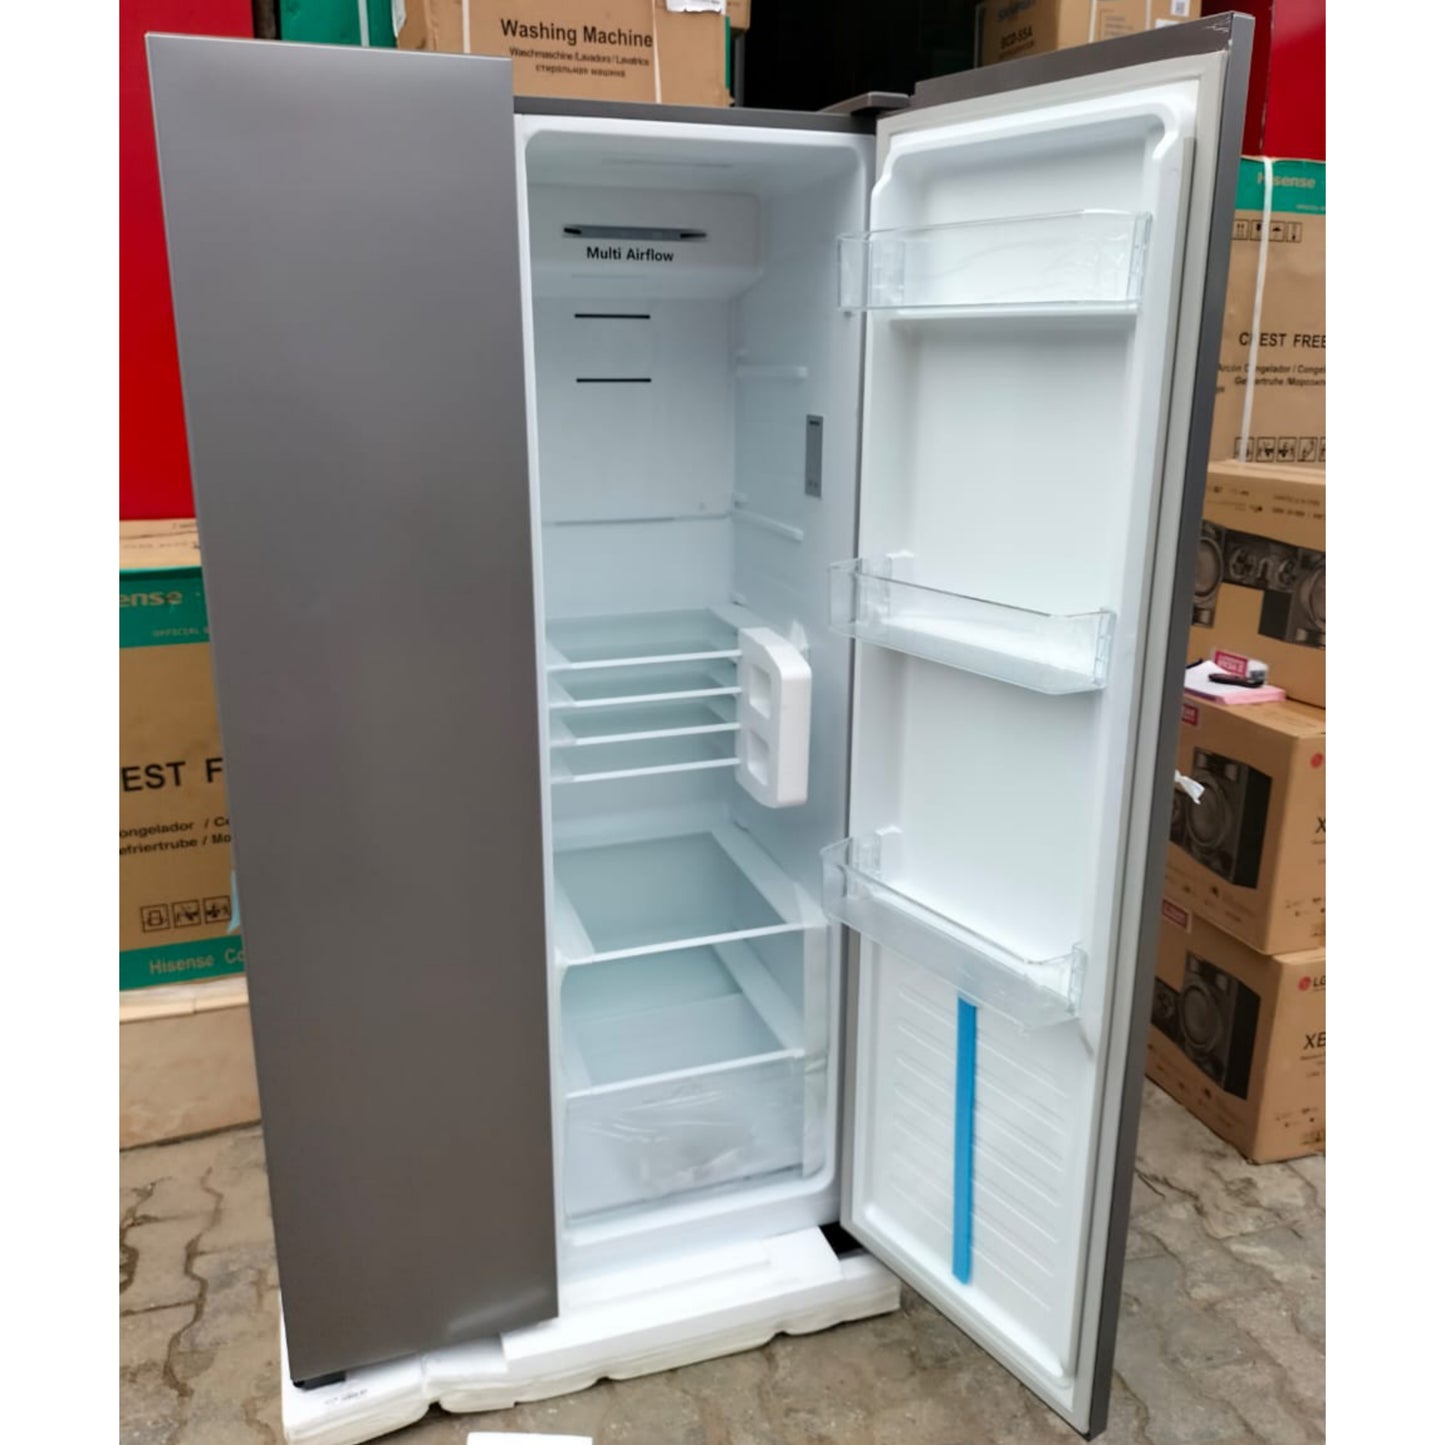 Hisense REF 67WSI 516L Side by Side Refrigerator + 1 Year Warranty - Brand New